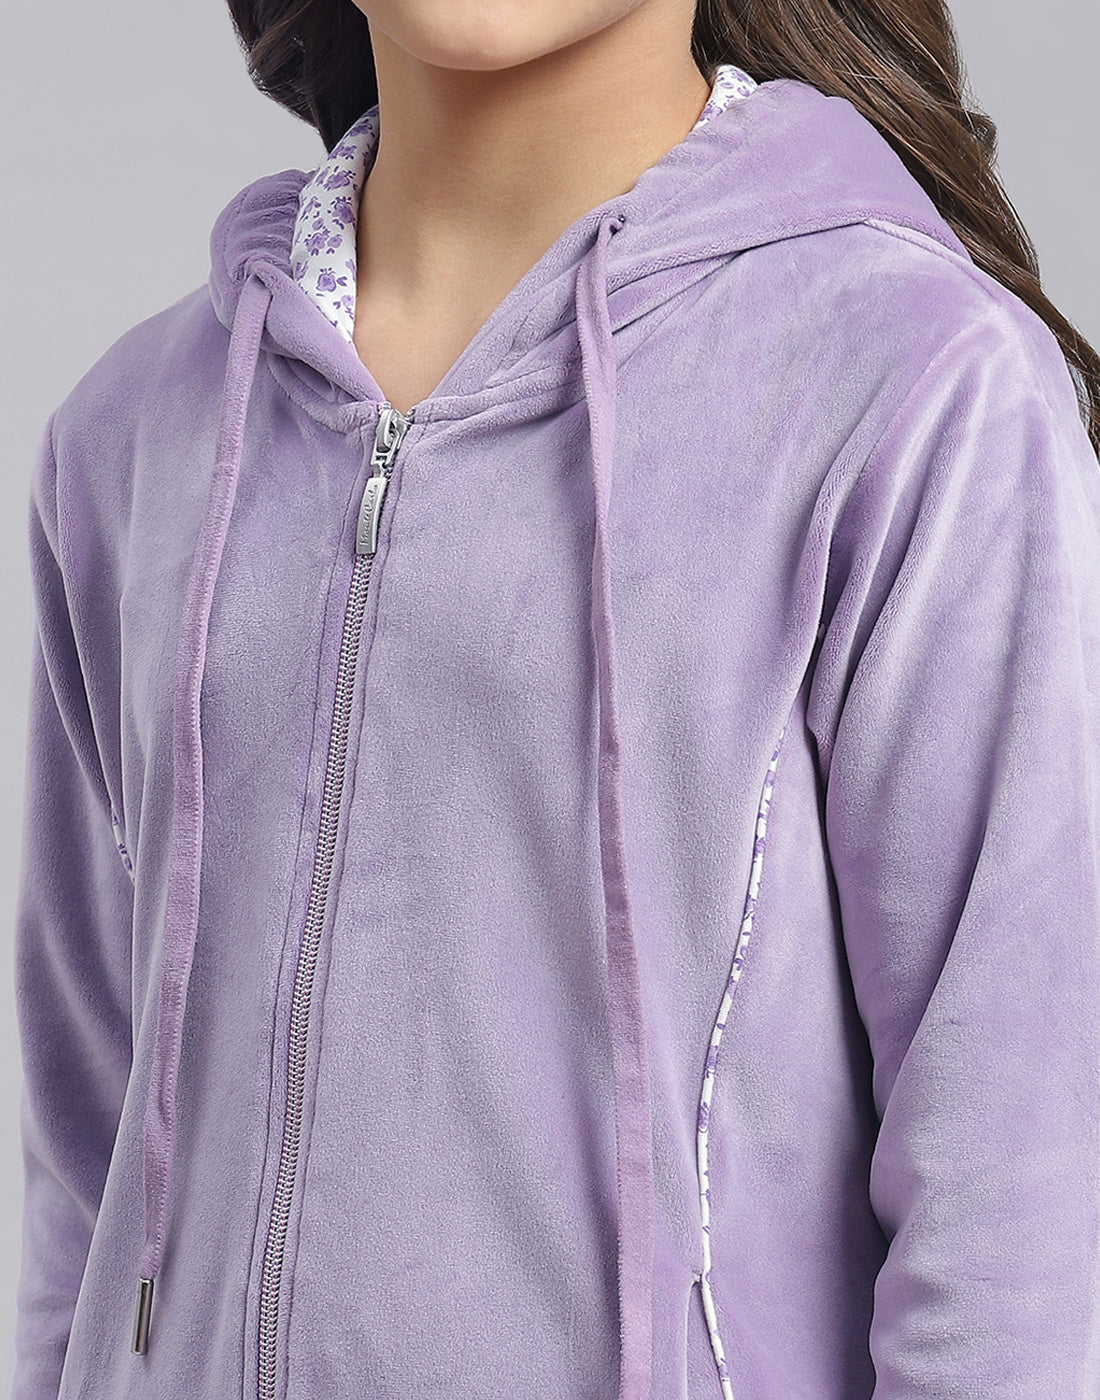 Girls Purple Solid Hooded Full Sleeve Tracksuit